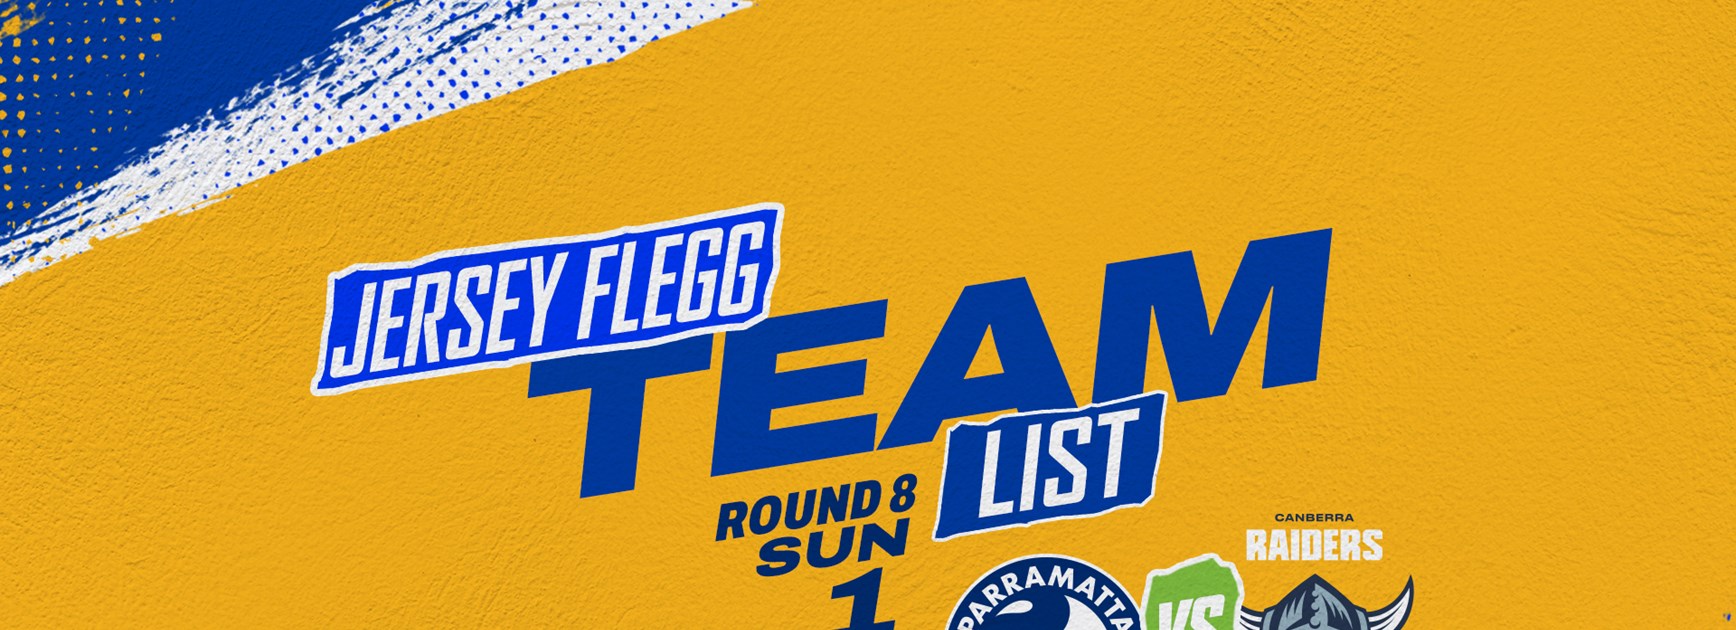 Jersey Flegg Cup Team List - Eels v Raiders, Round Eight